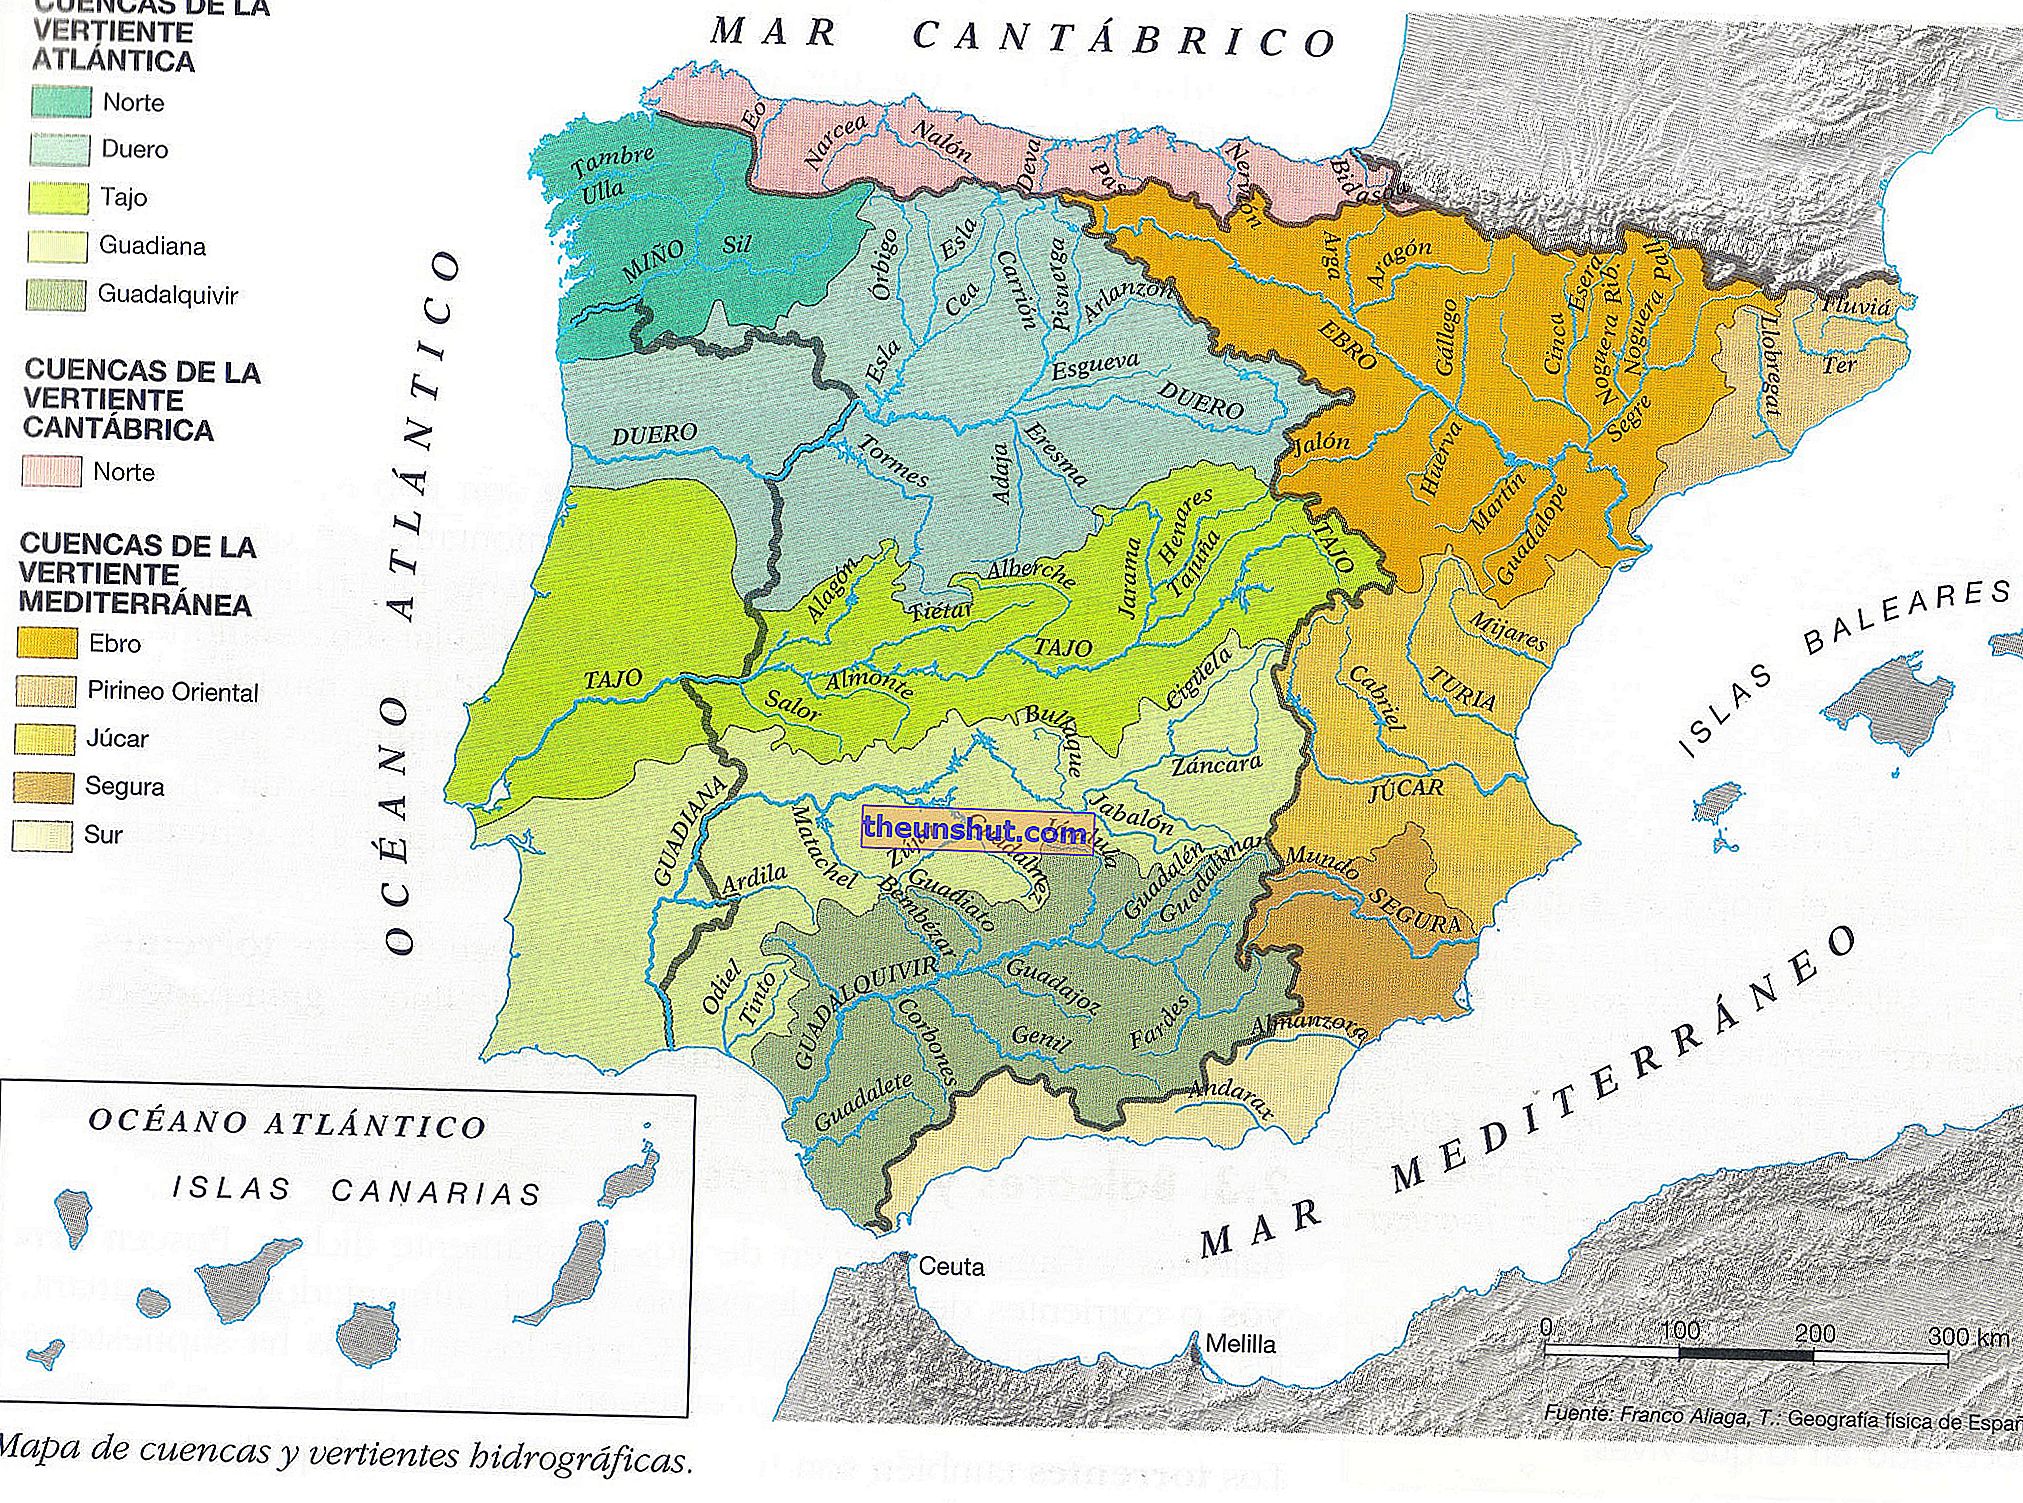 Mapy hydrografických povodí polostrova